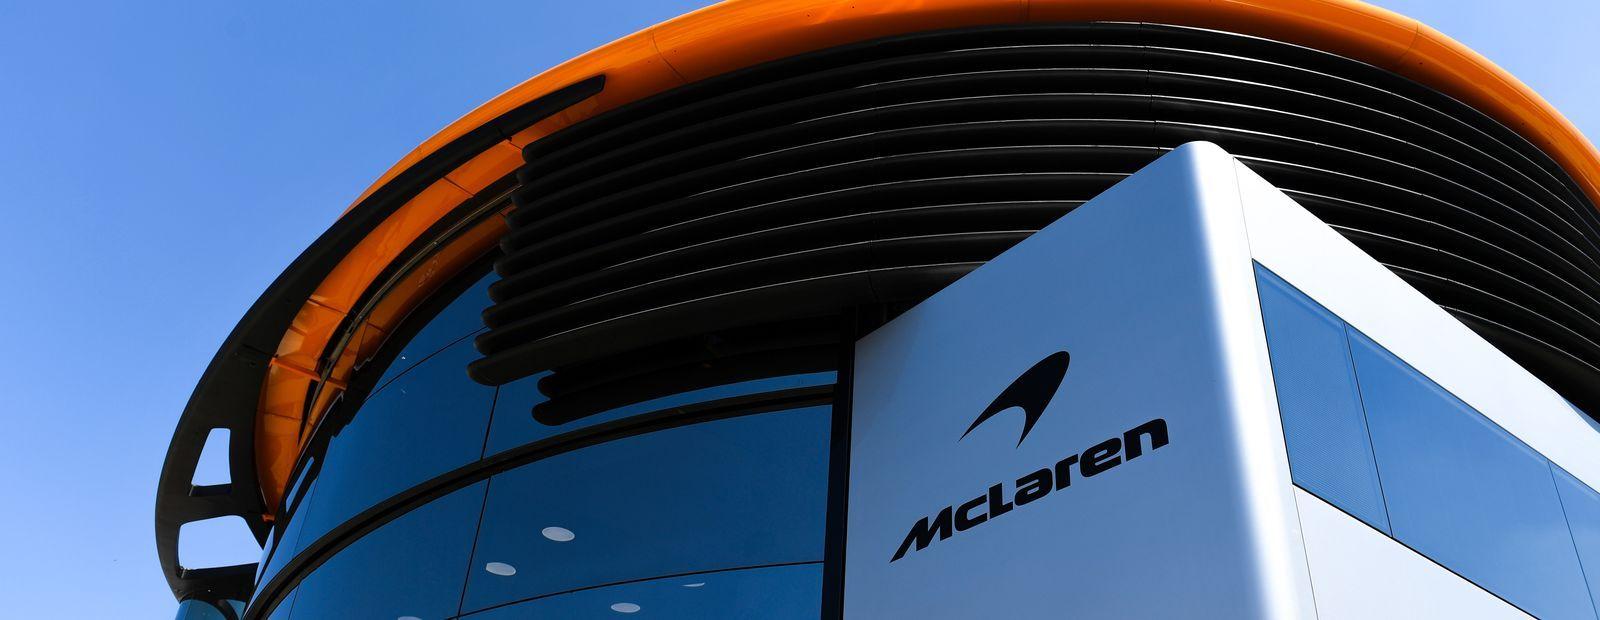 Mexca British American Tobacco Logo - McLaren Formula 1 Racing announces global partnership